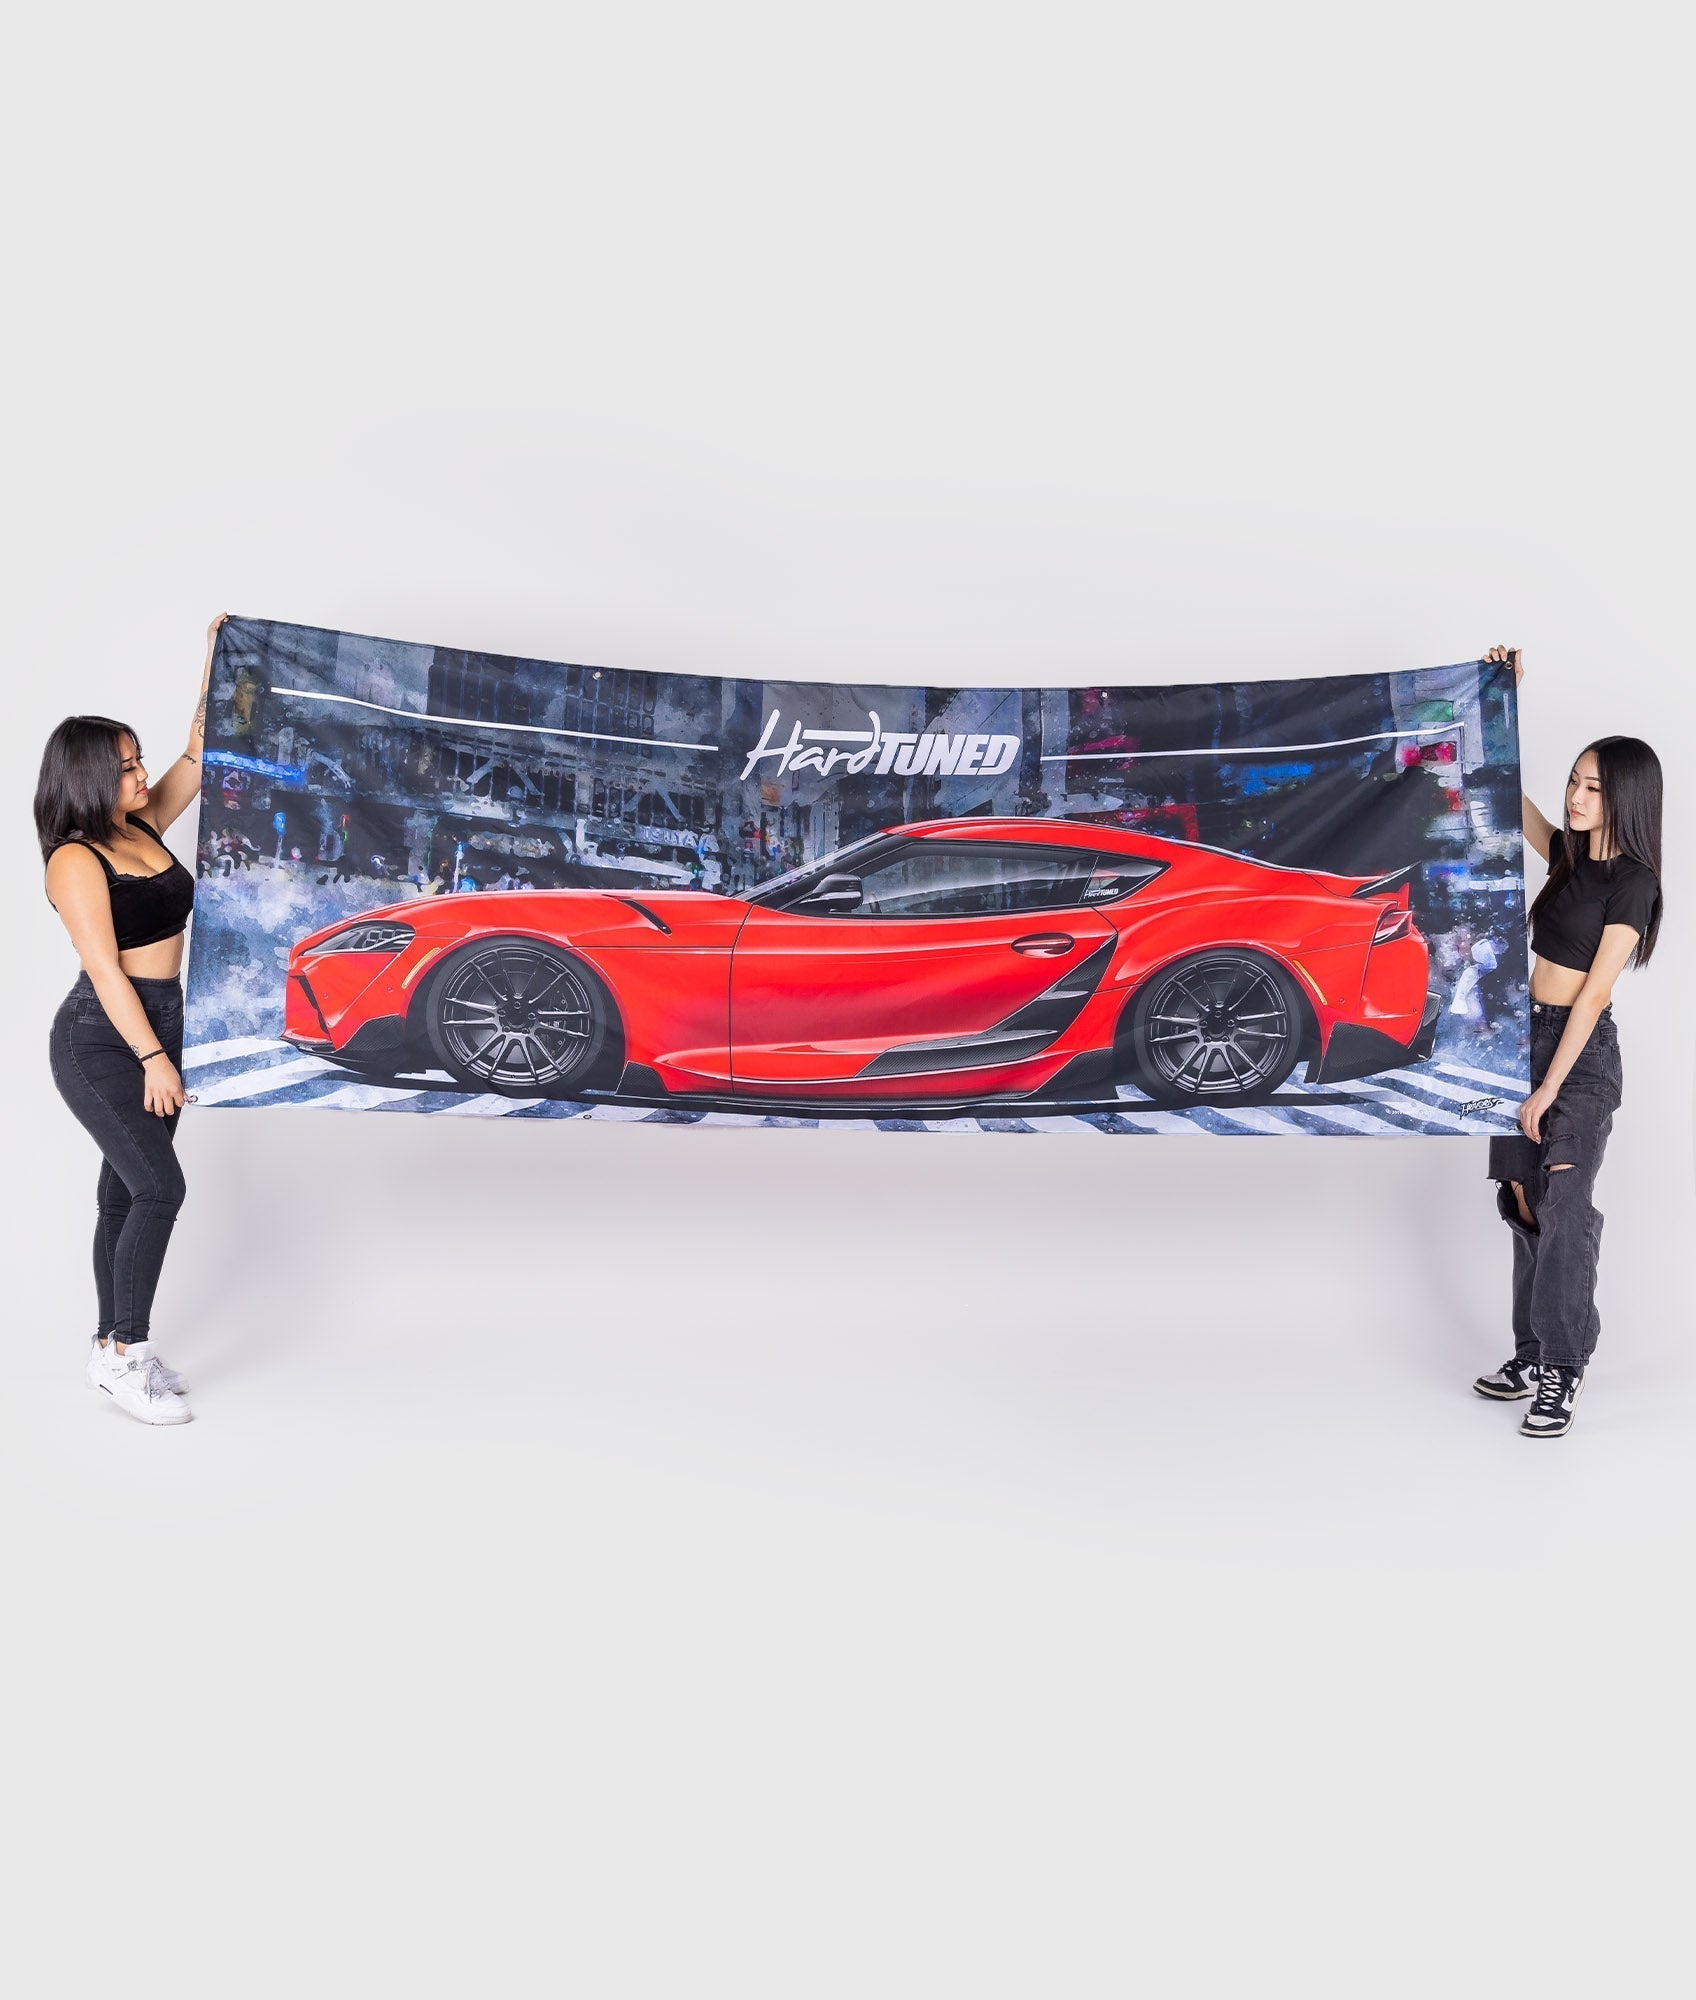 Giant Toyota Supra MKV Red Garage Flag - Hardtuned